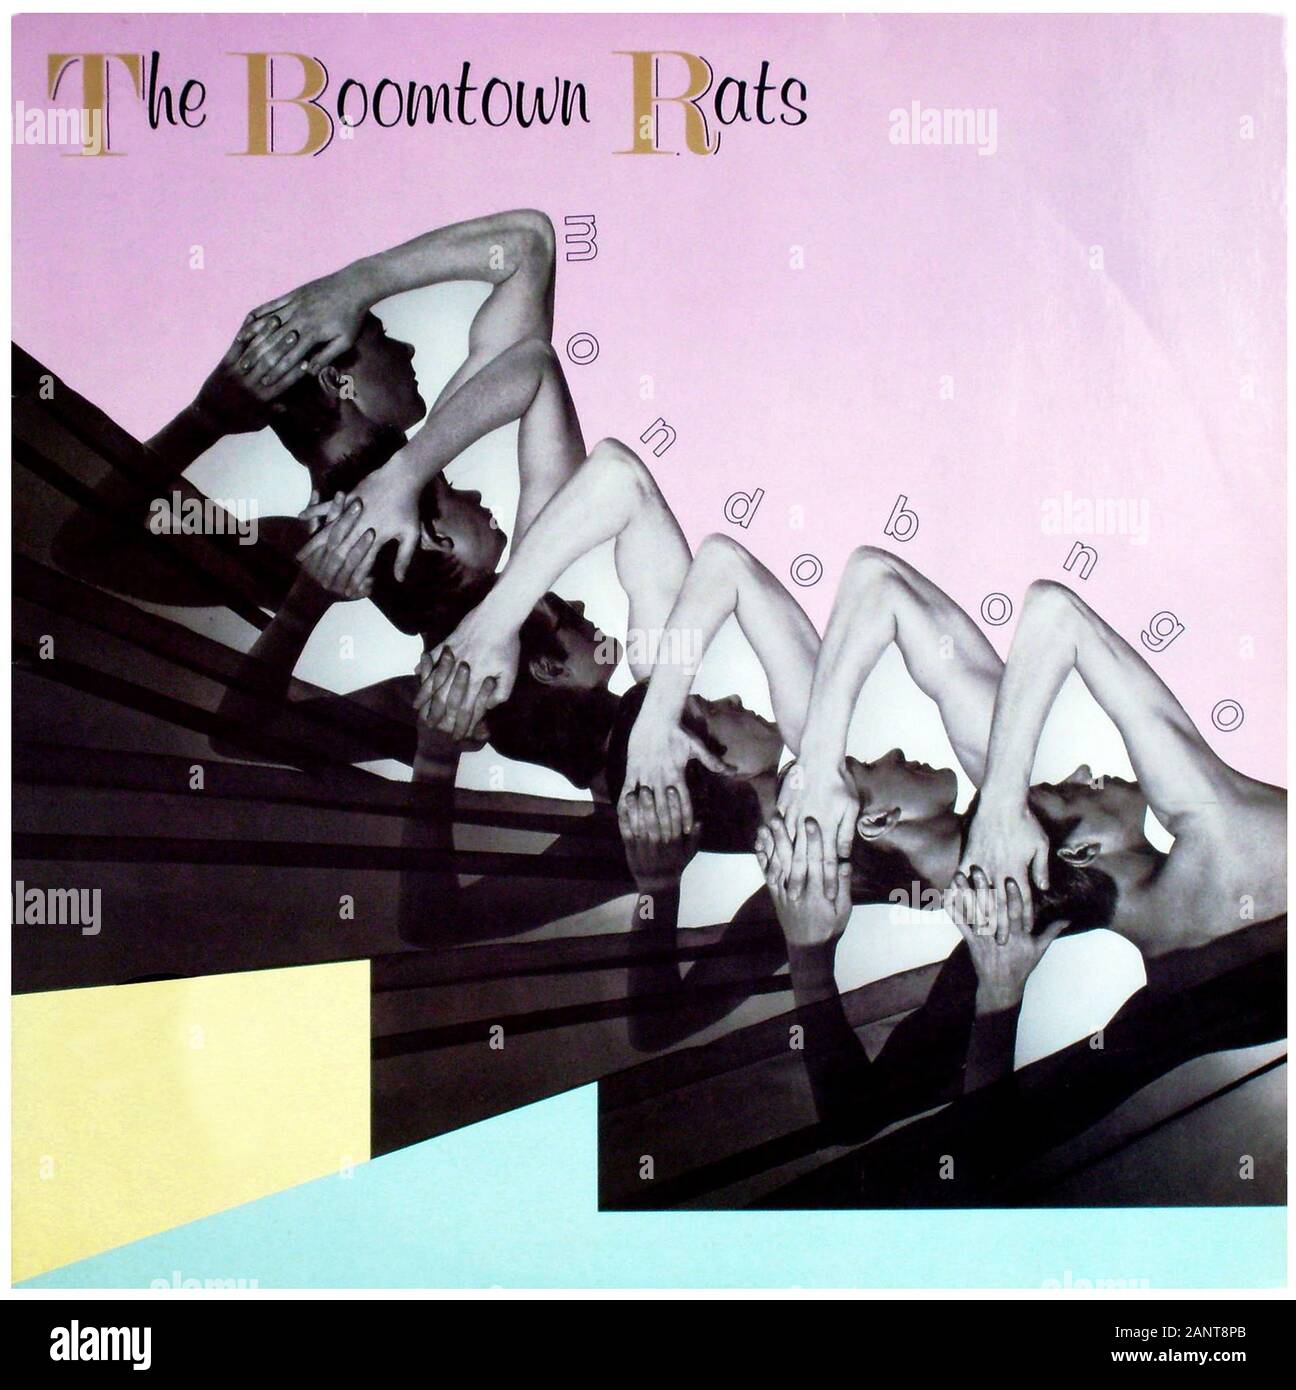 The Boomtown Rats - Mondo Bongo - Classic vintage vinyl album